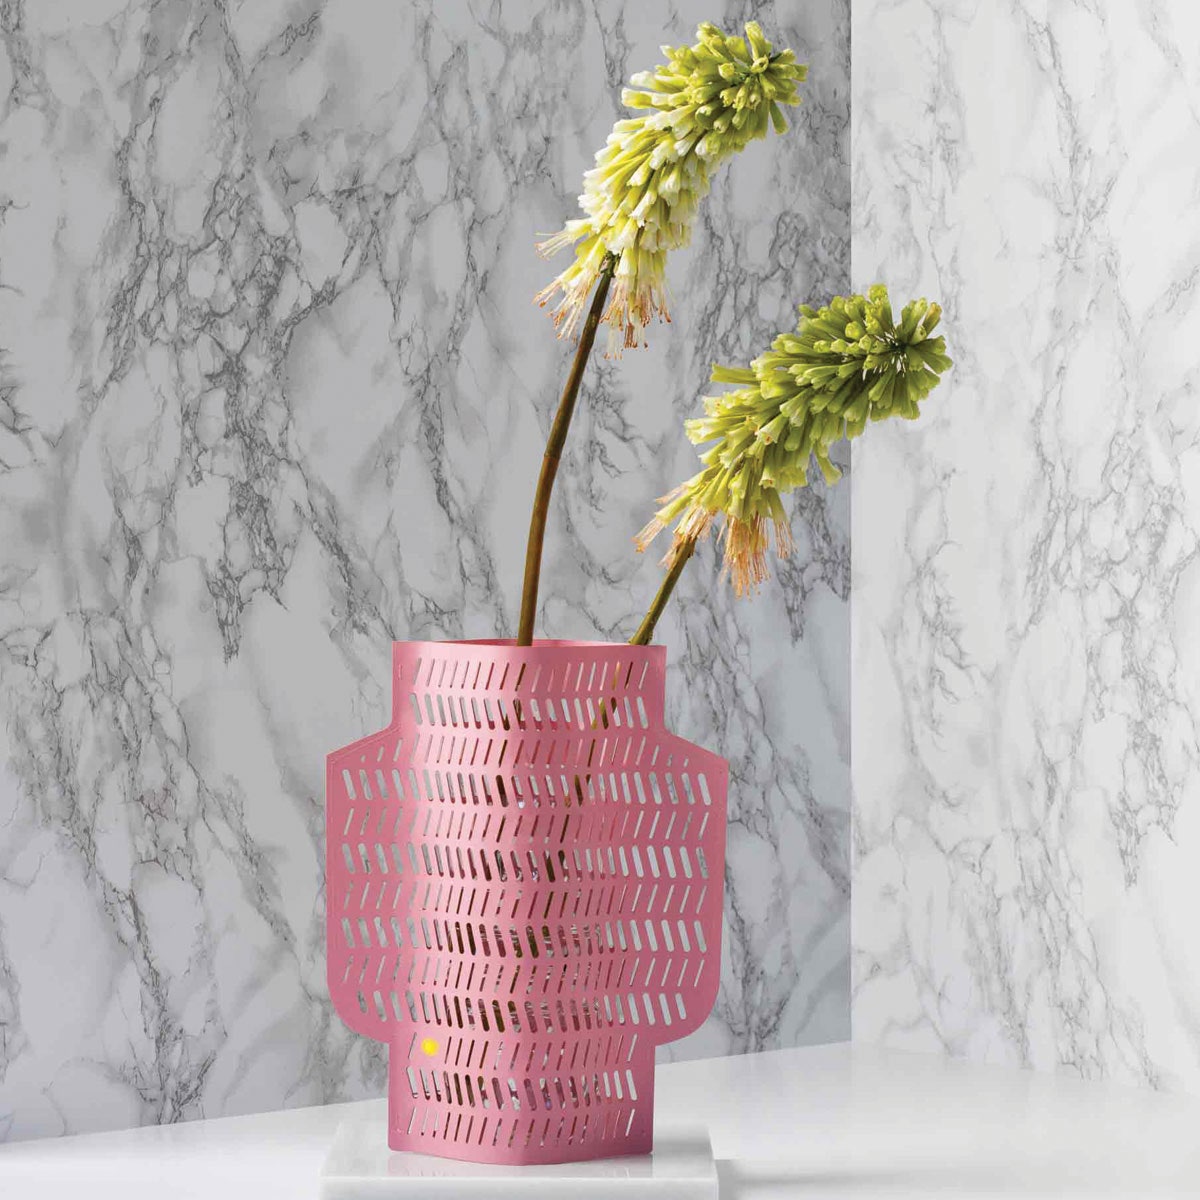 paper-vases-on-thursd-featured